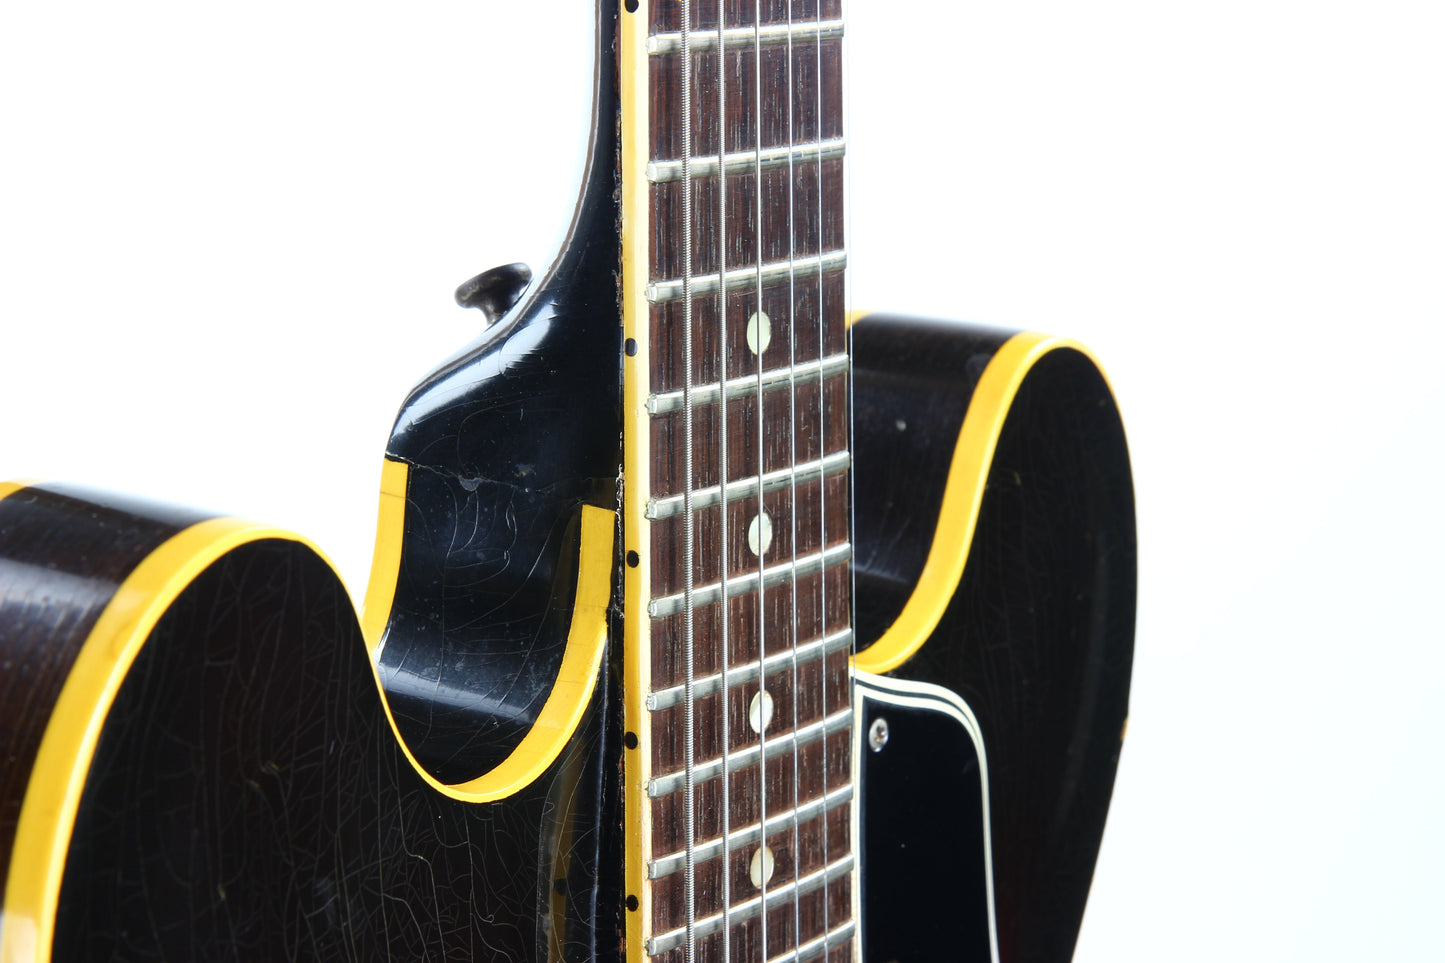 1961 Gibson ES-330 TD Sunburst Dot Neck Vintage Thinline Electric Guitar - Brown Lifton Case, 2 P90 Pickups! es335